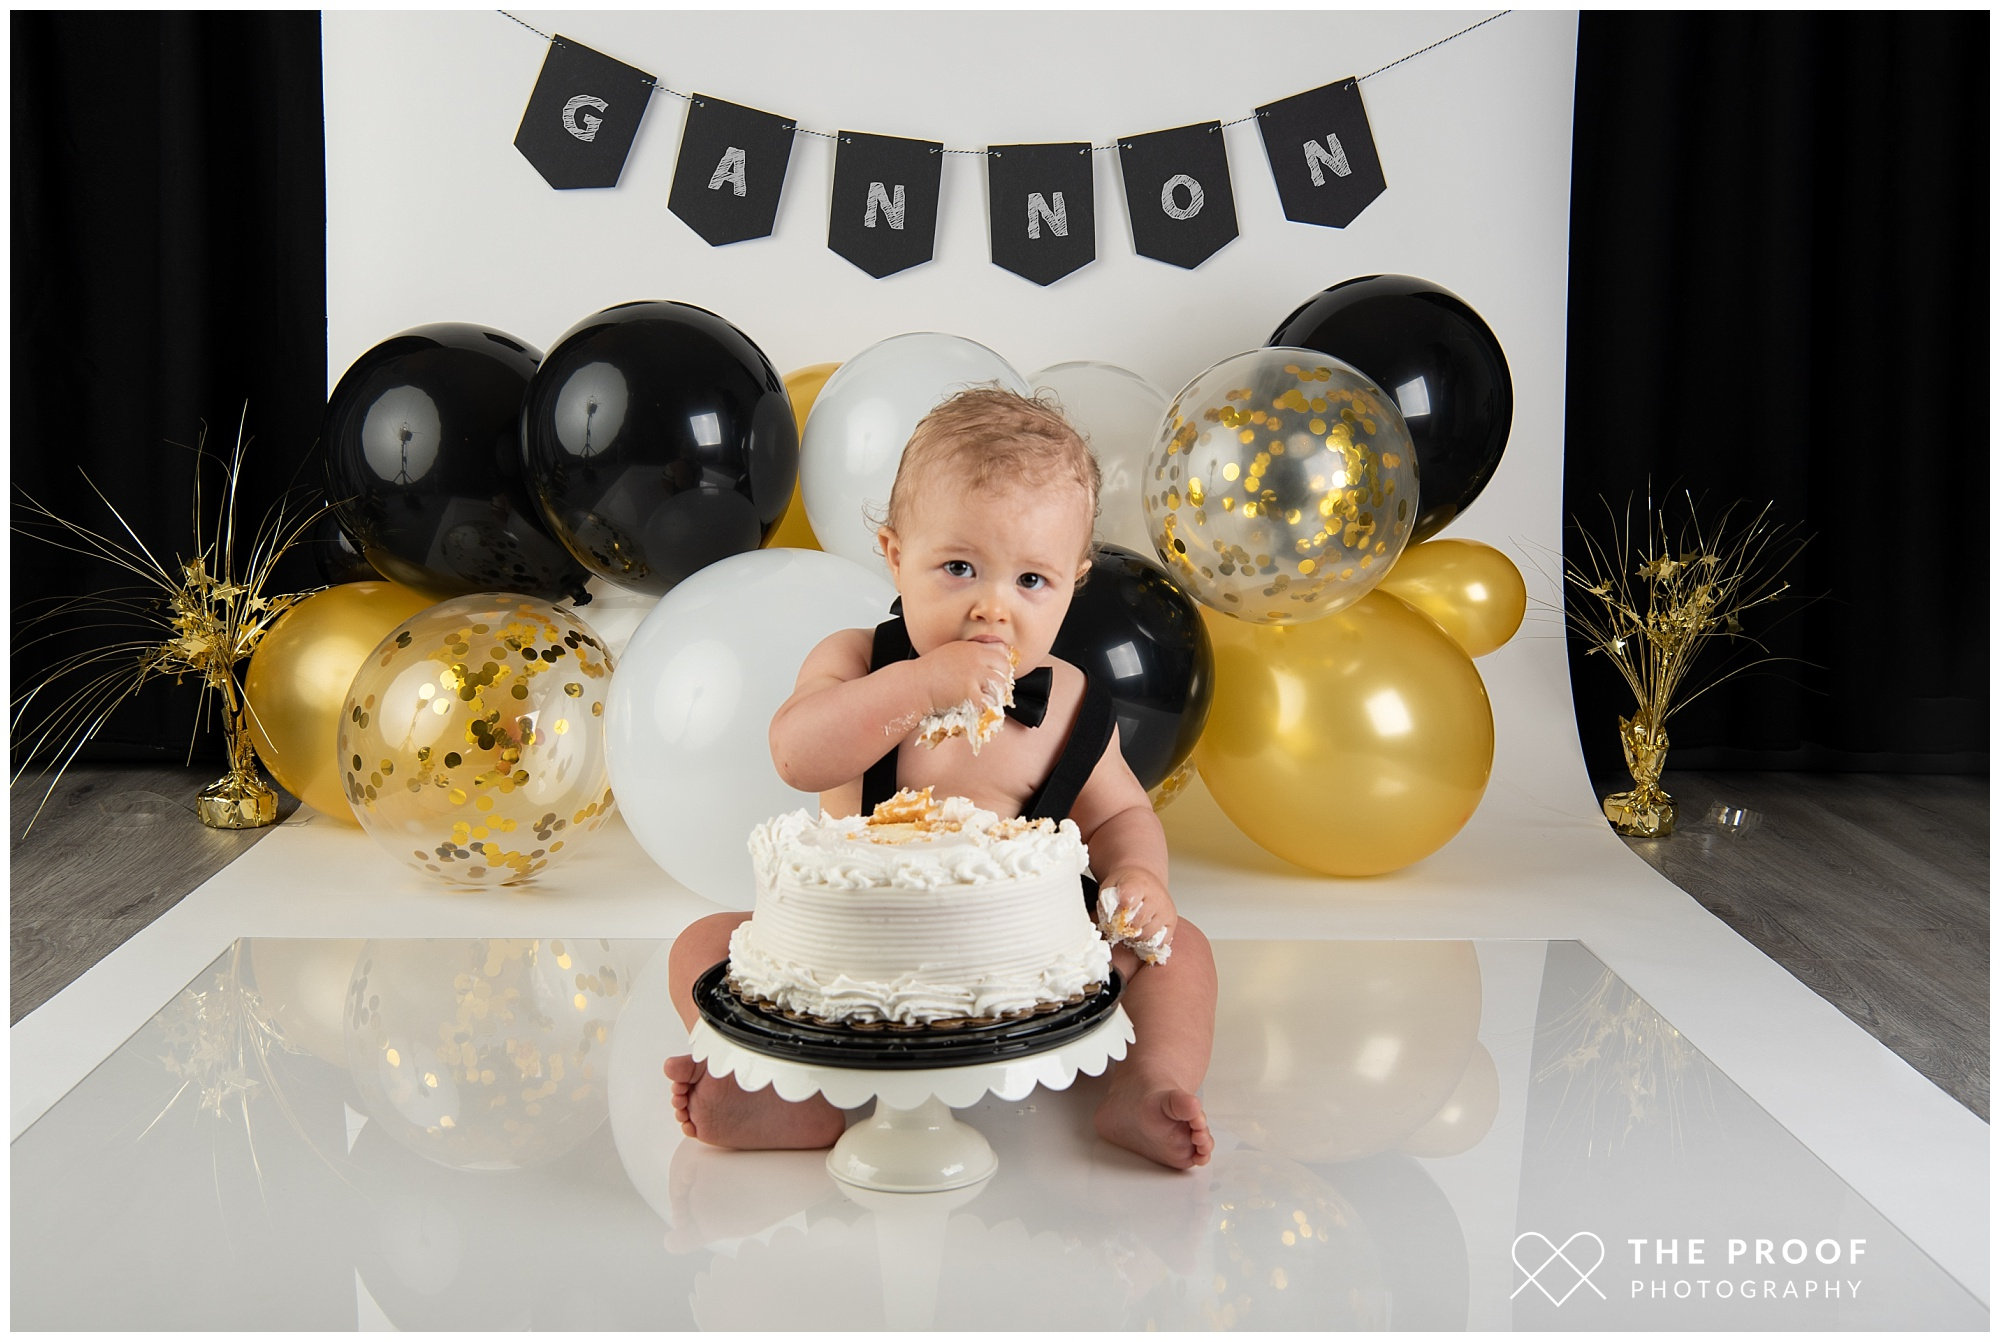 Cake Smash and Splash, first birthday photoshoot - SAMANTHA JADE PHOTOGRAPHY